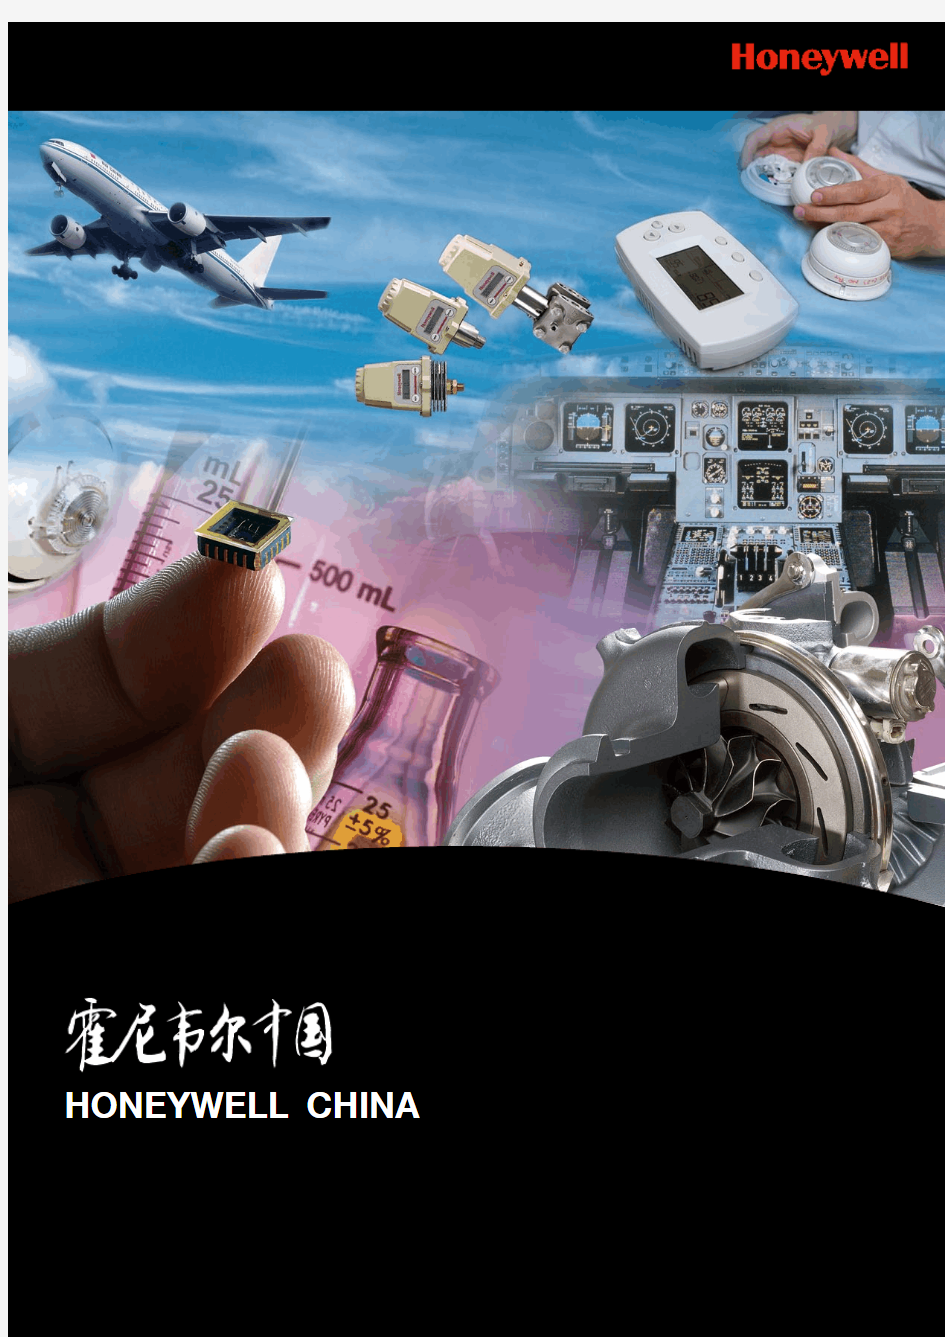 Honeywell China Brochure 霍尼韦尔中国